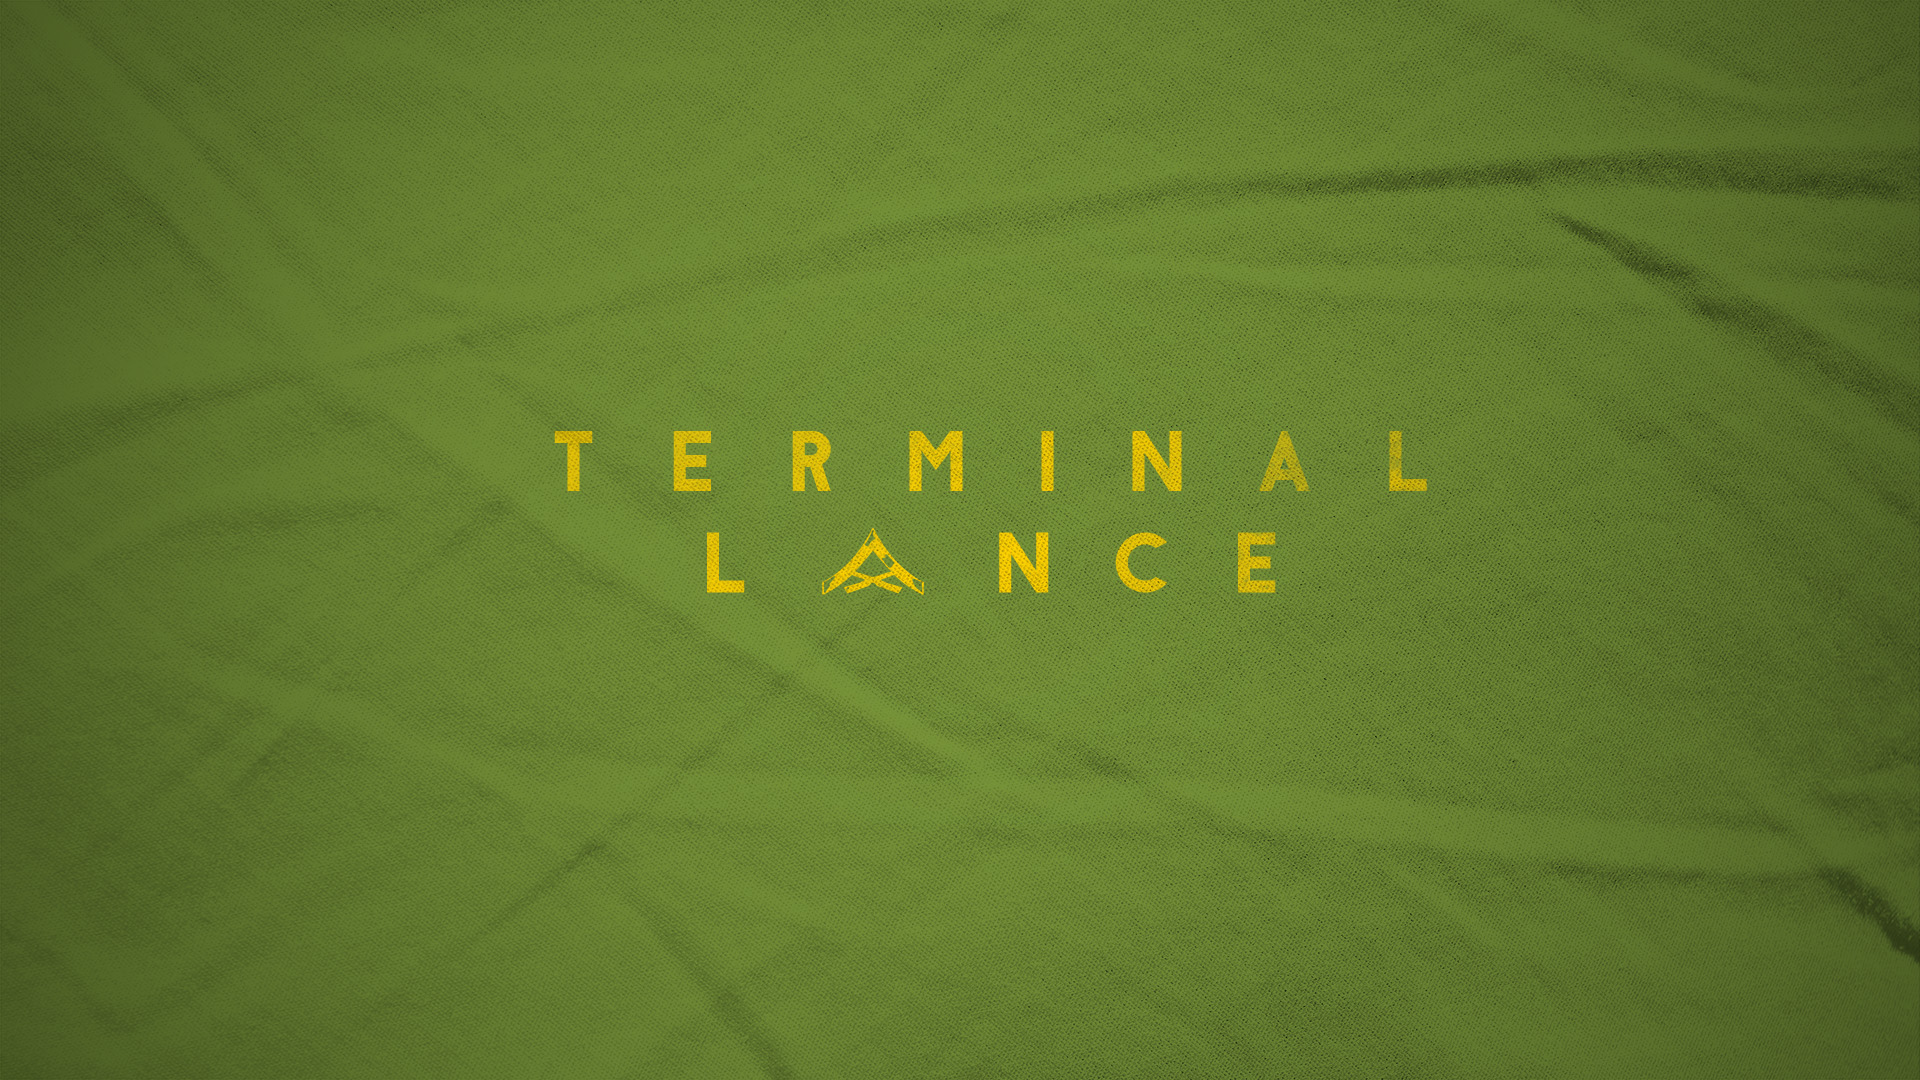 (c) Terminallance.com